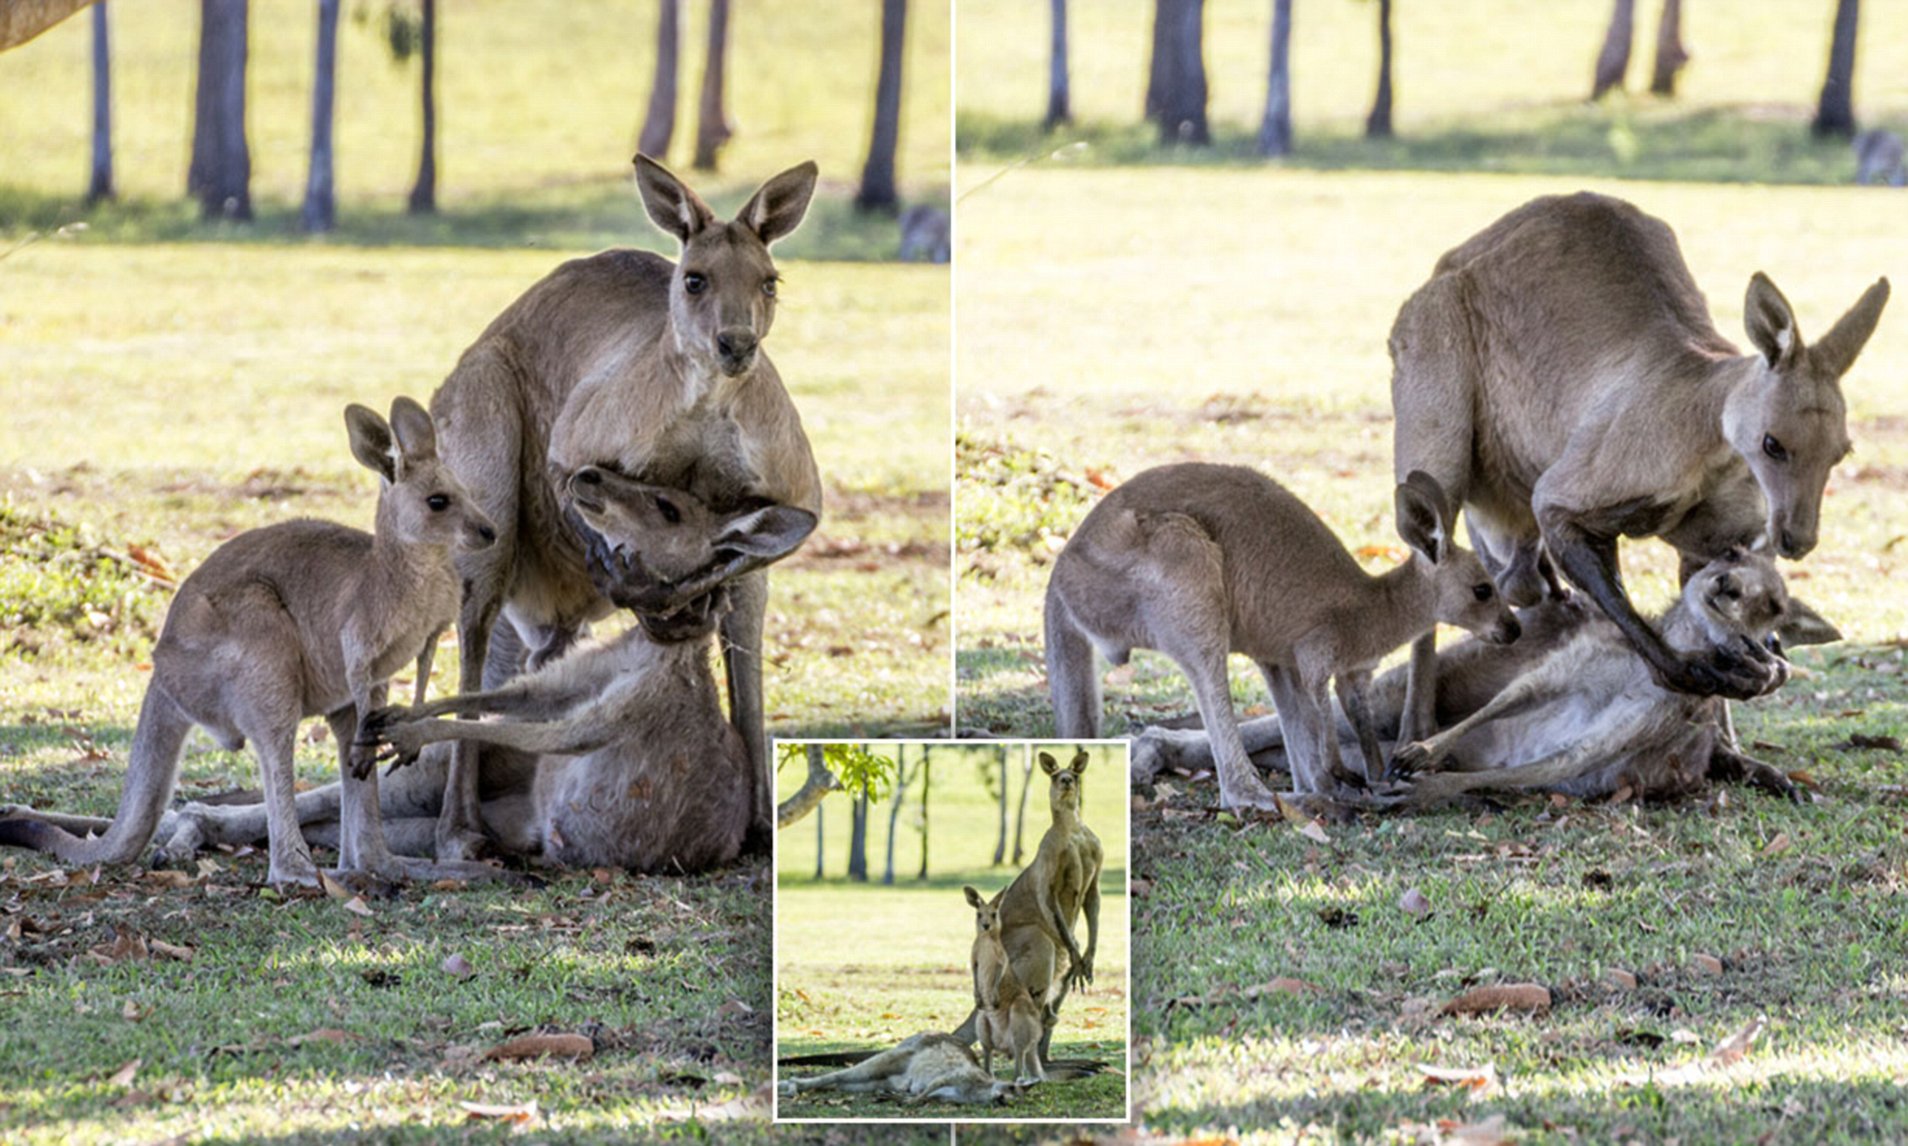 Do kangaroos leave their babies?